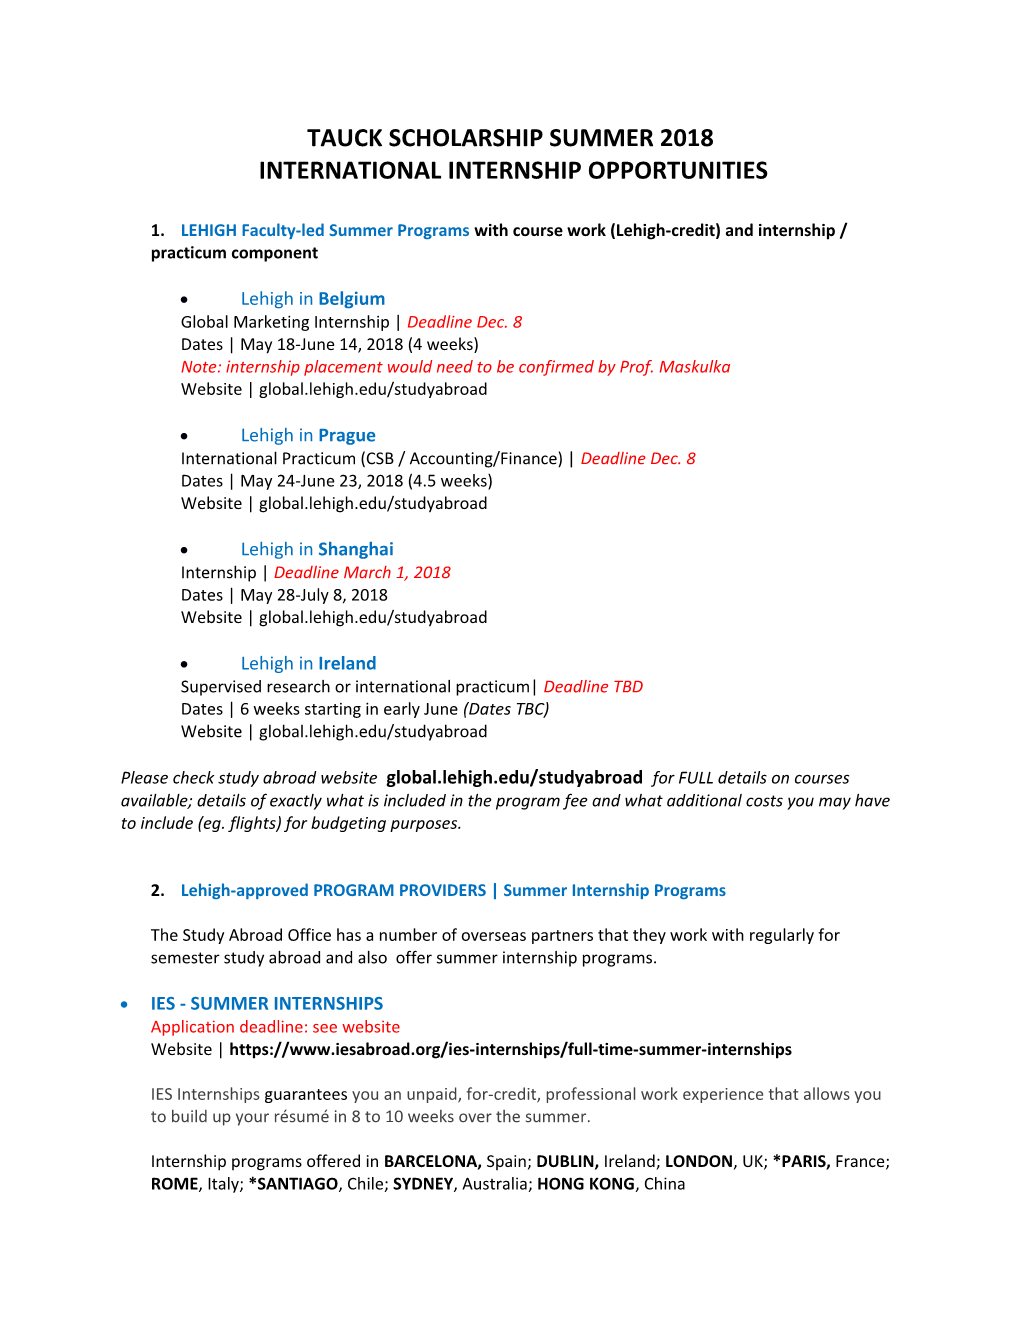 Tauck Scholarship Summer 2018 International Internship Opportunities